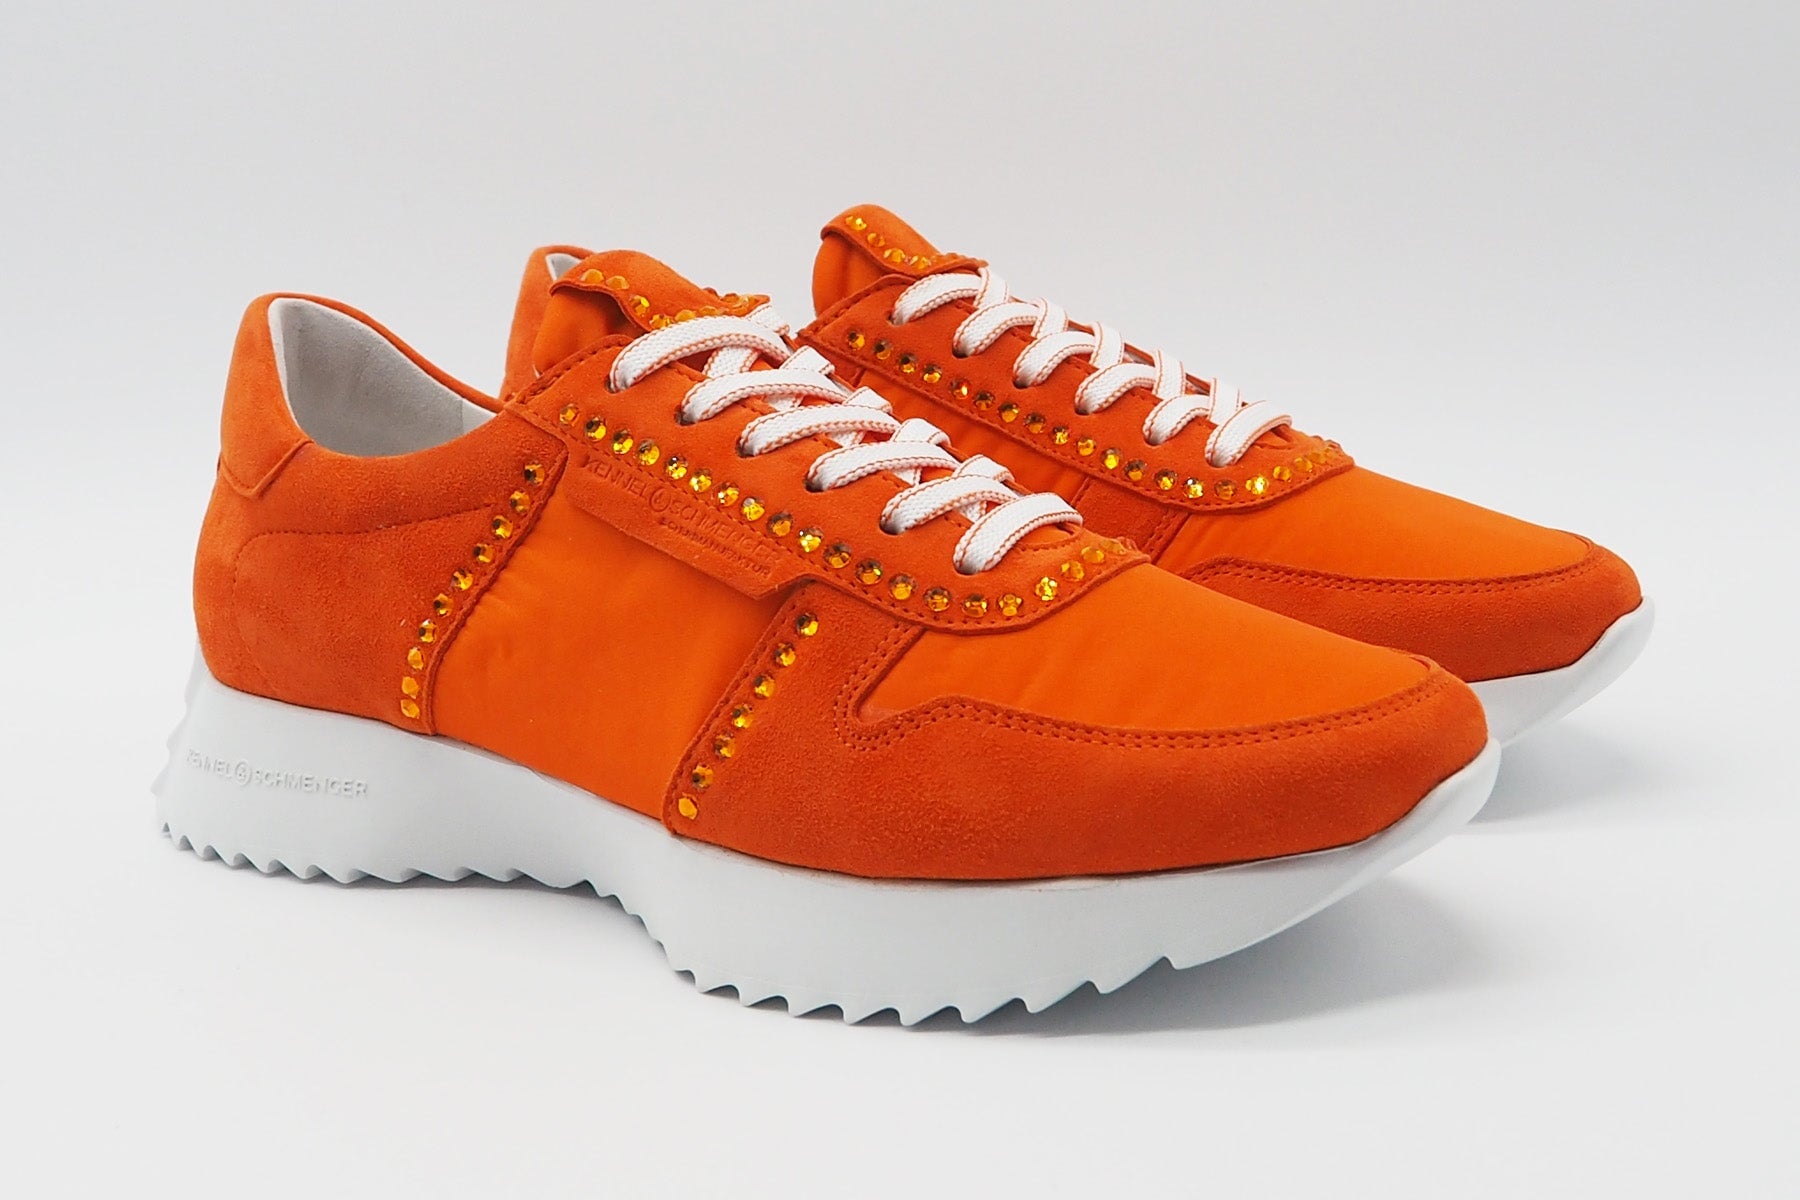 Damen Sneaker aus Veloursleder & Nylon in Orange mit Strass - Absatz 3,5cm - PULL Damen Sneaker Kennel & Schmenger 